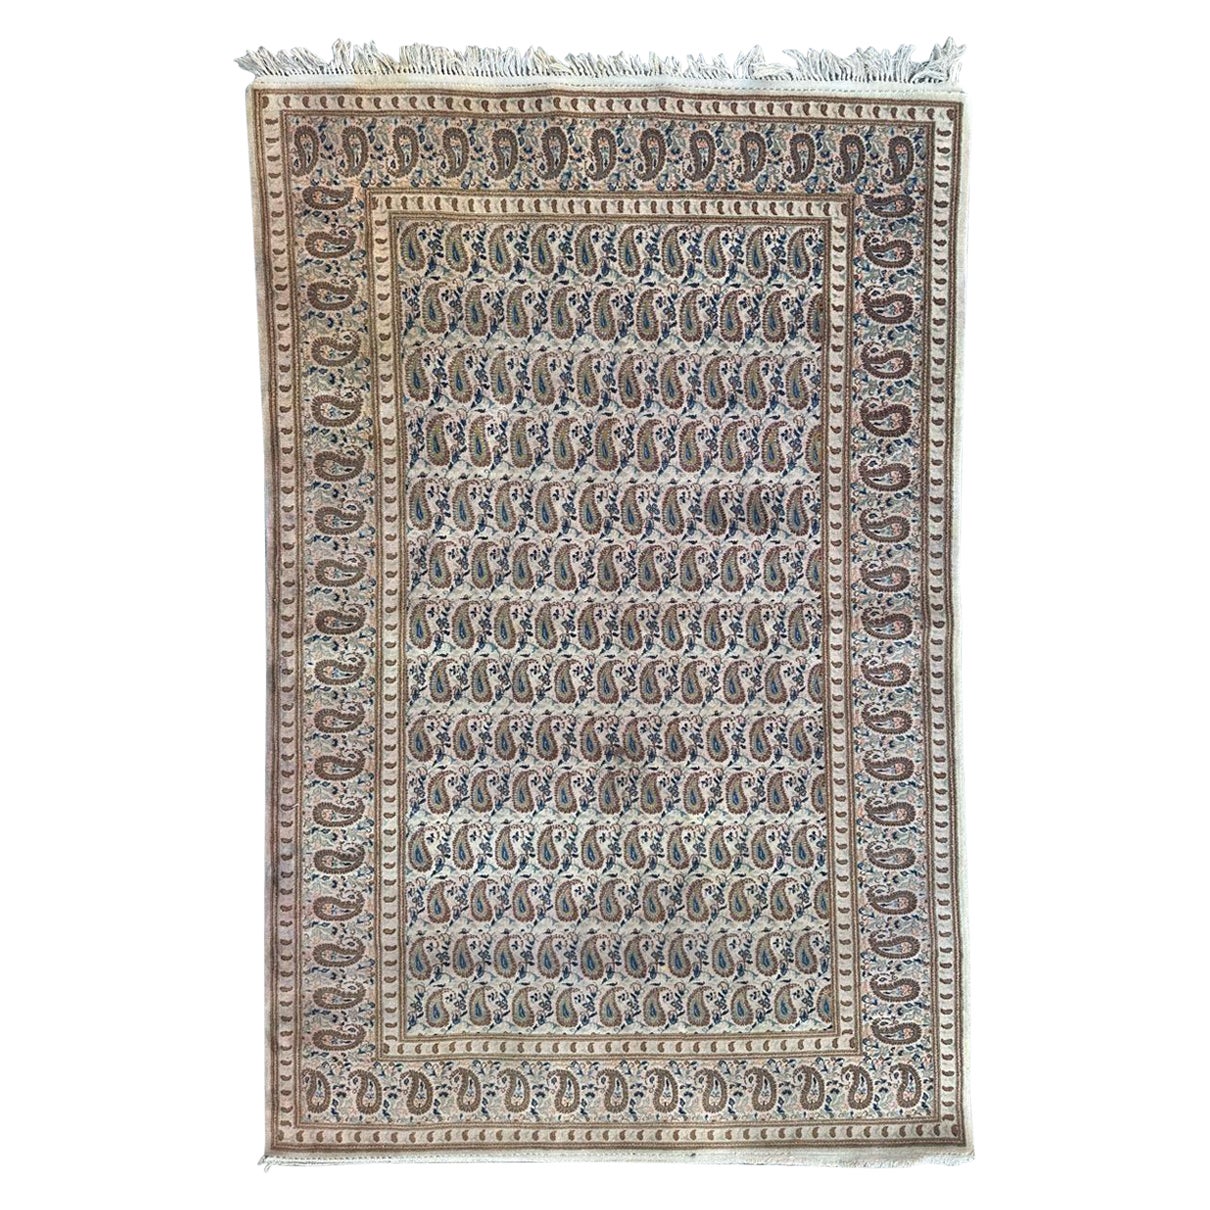 Bobyrug's Nice mid century fine kashan rug 